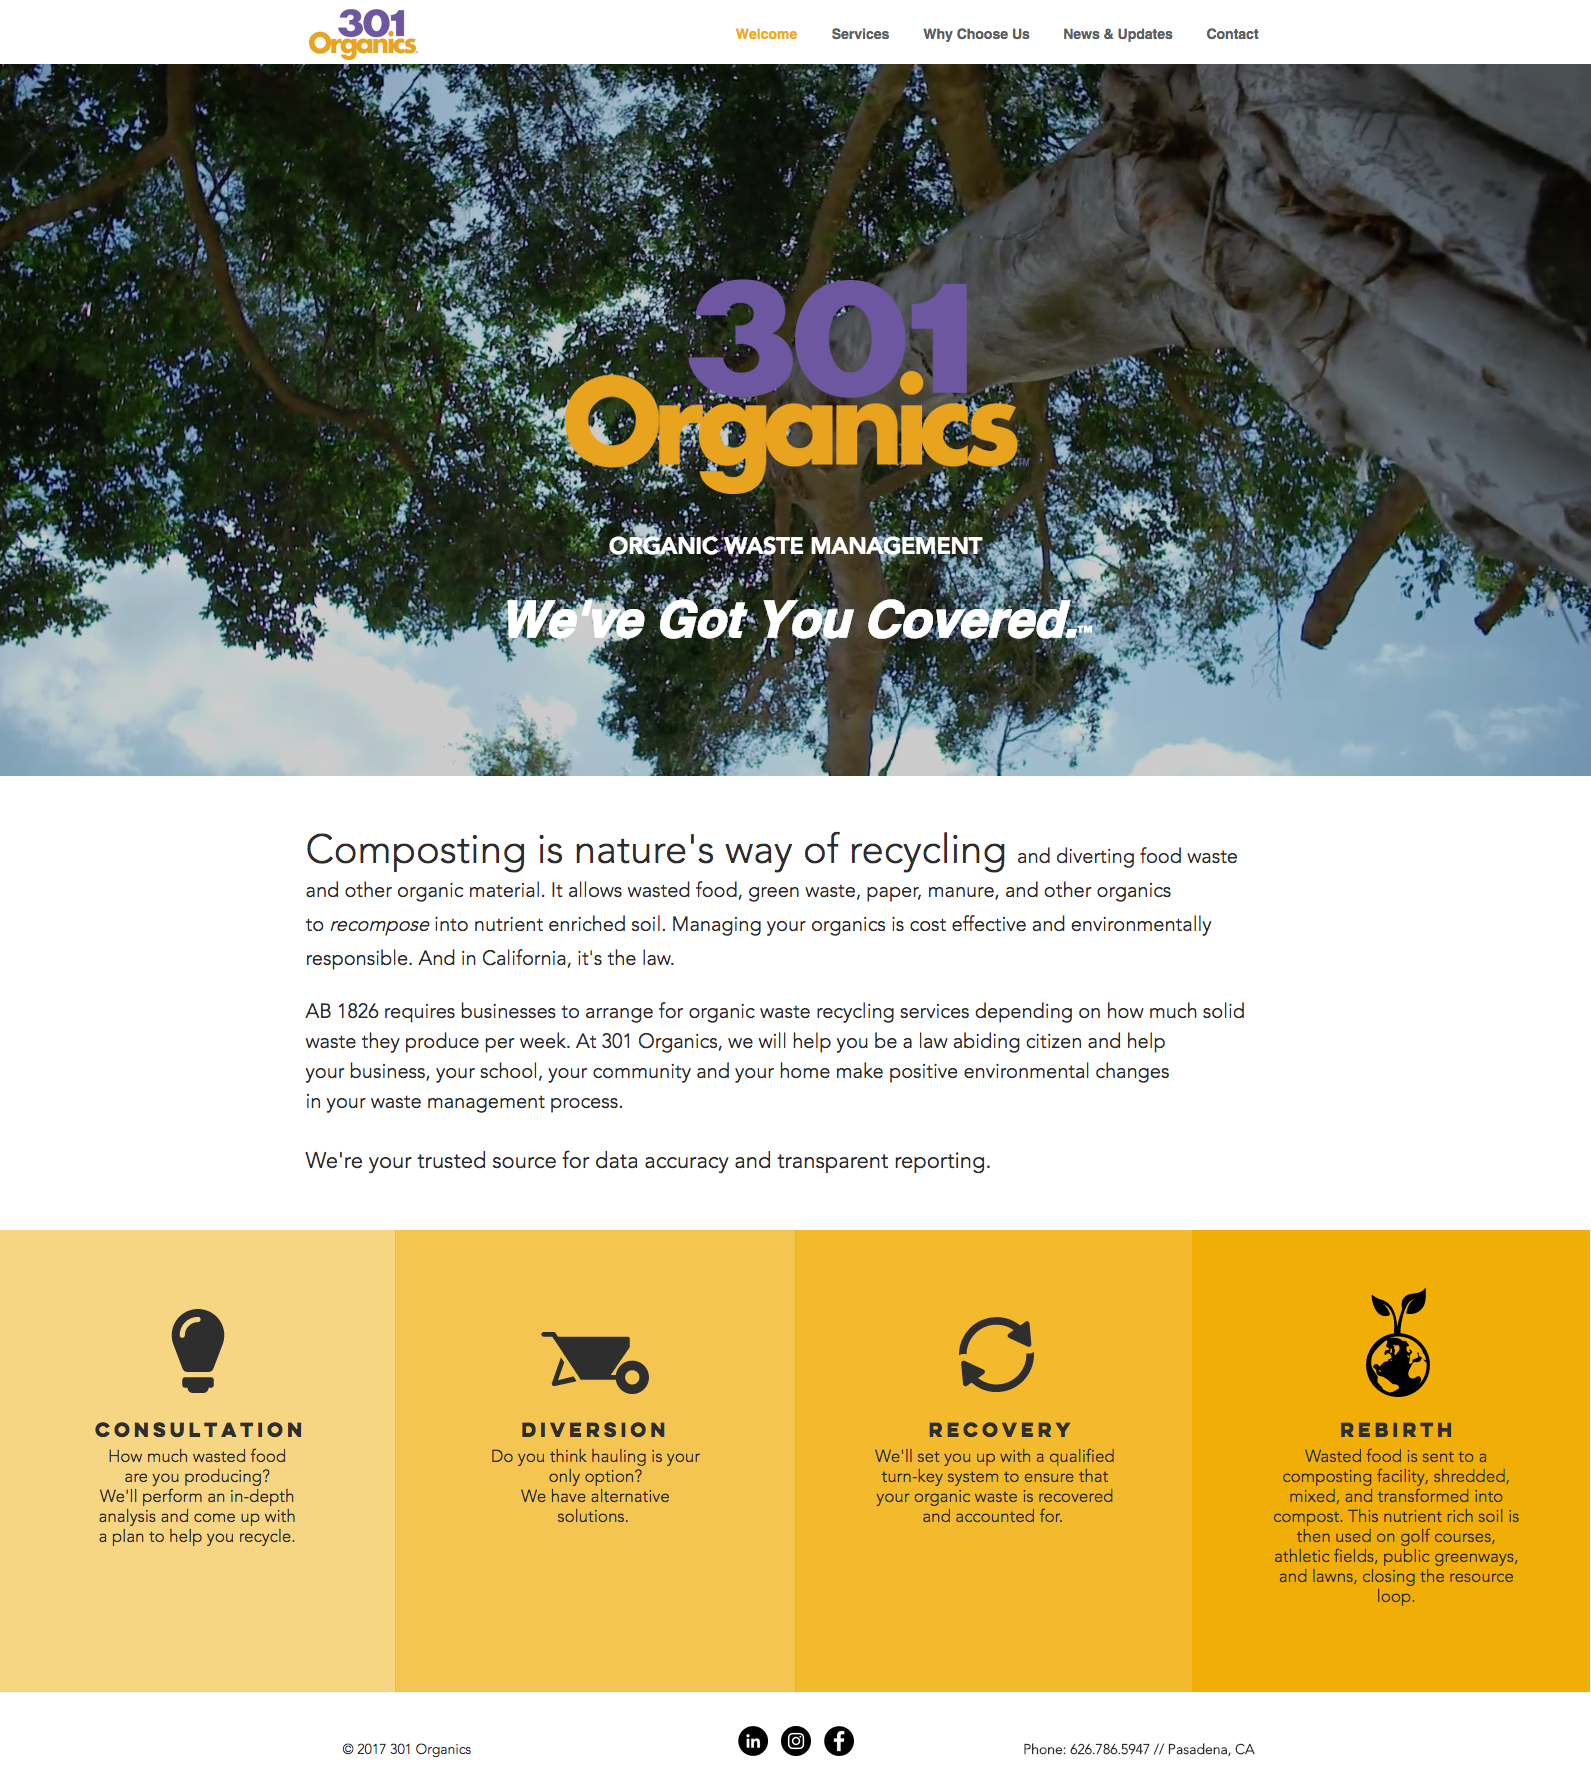 301 Organics Website Screenshot